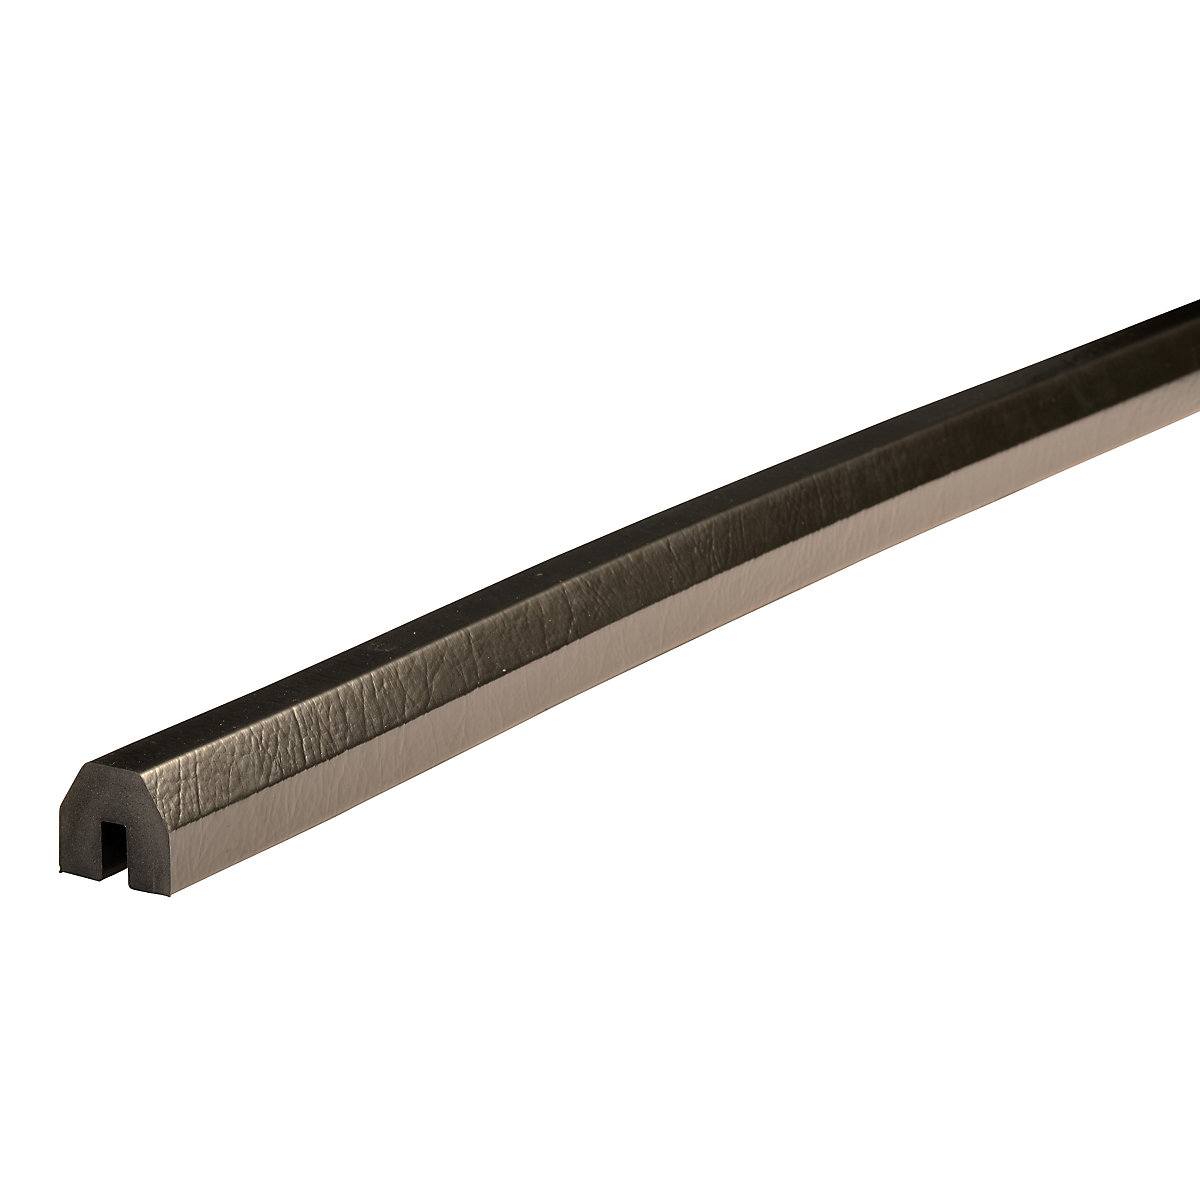 Knuffi® edge protection – SHG, type BB, 1 x 5 m roll, black-23